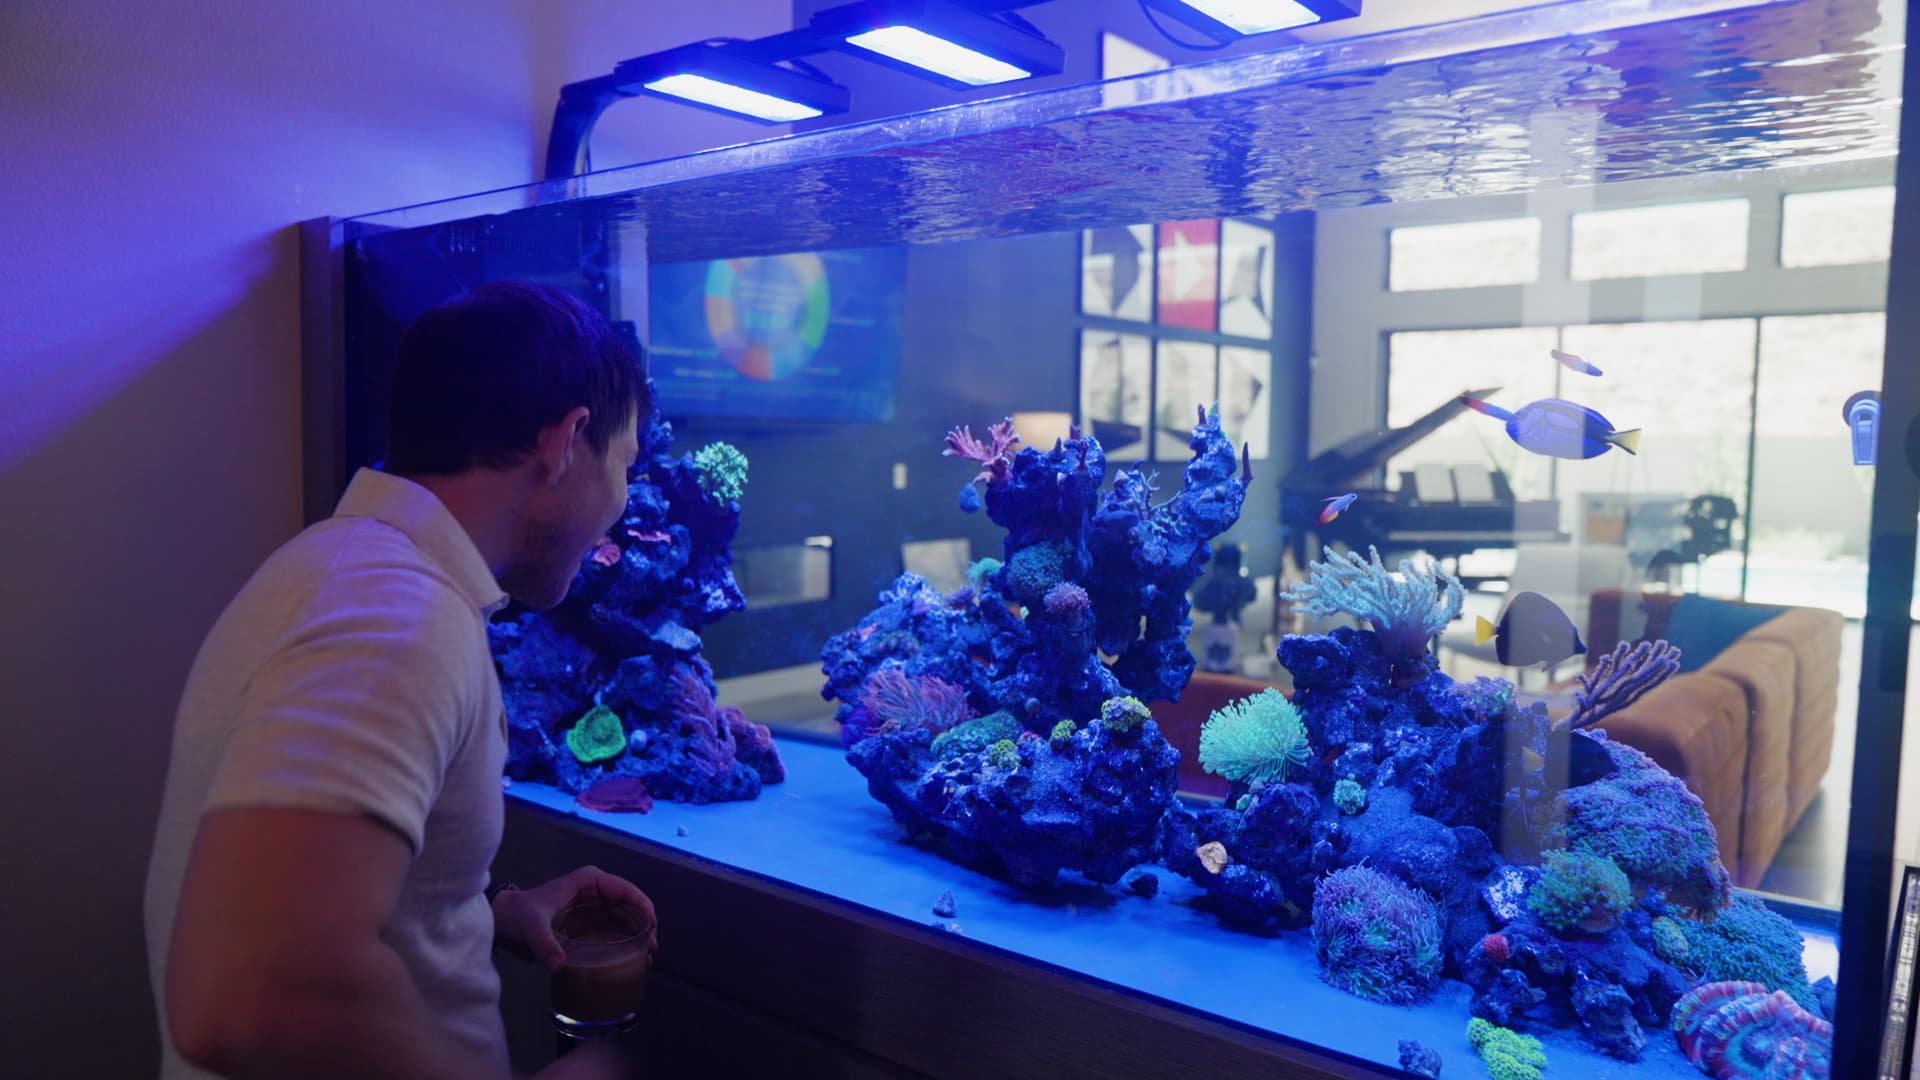 Graham Stephan has spent $45,000 building out his dream aquarium.